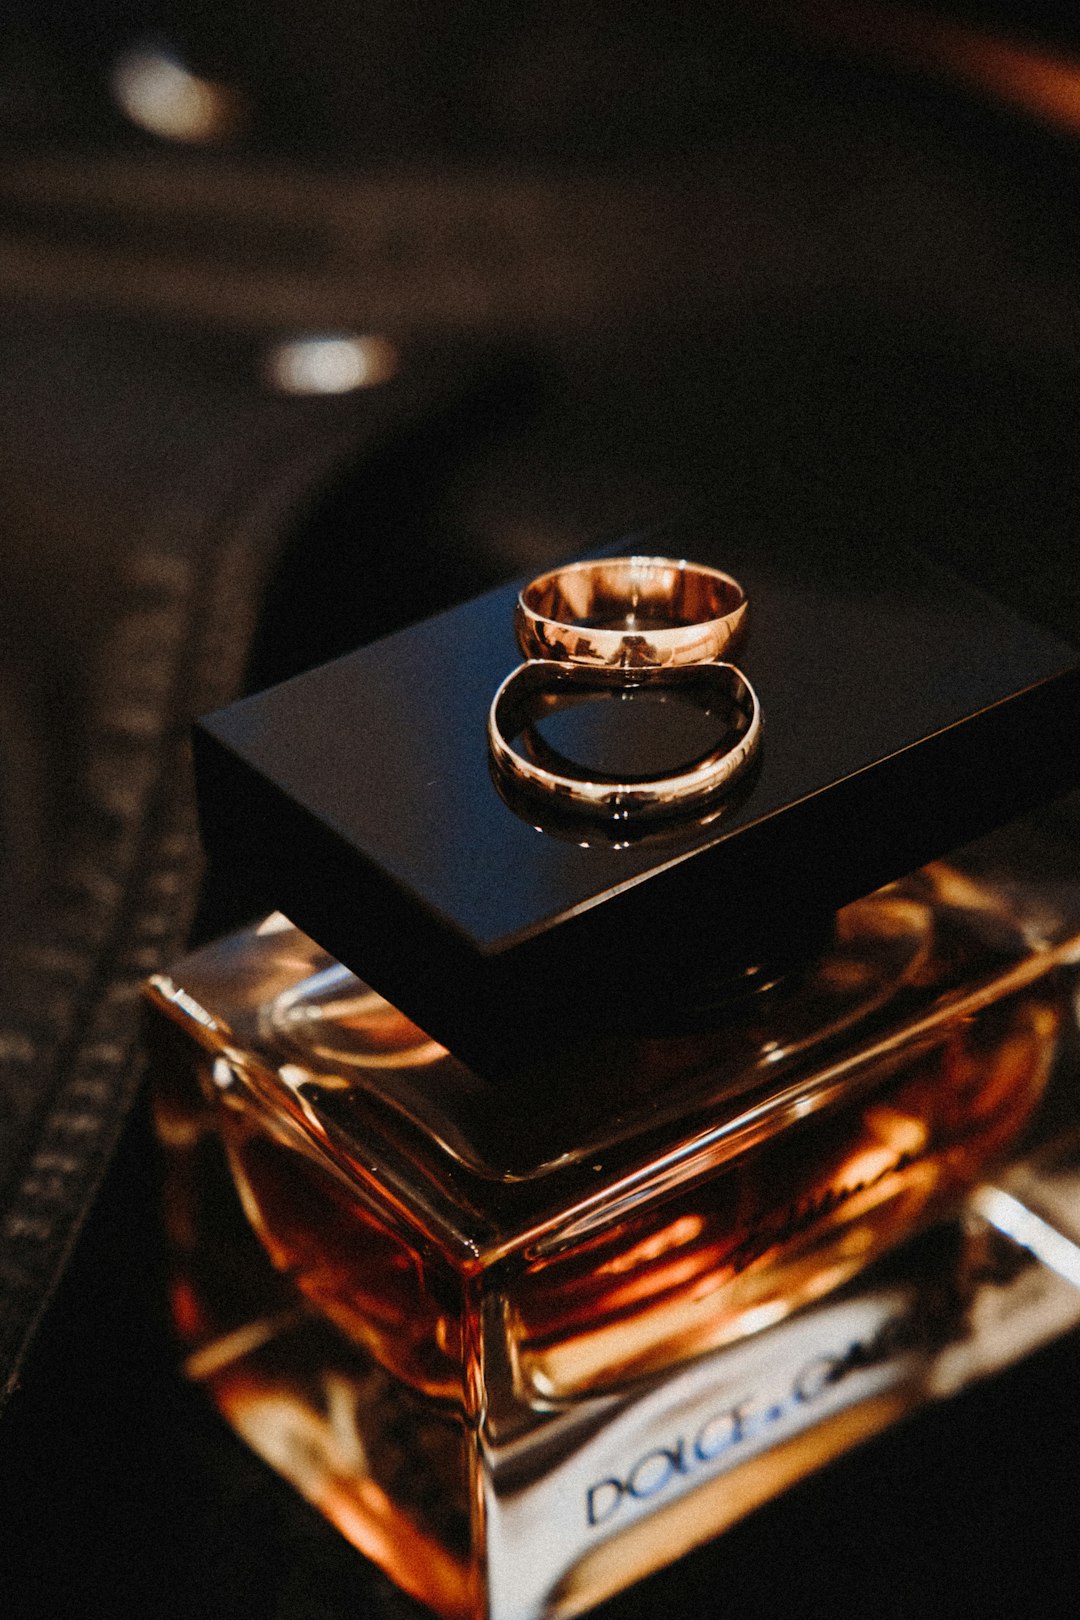 silver ring on black box